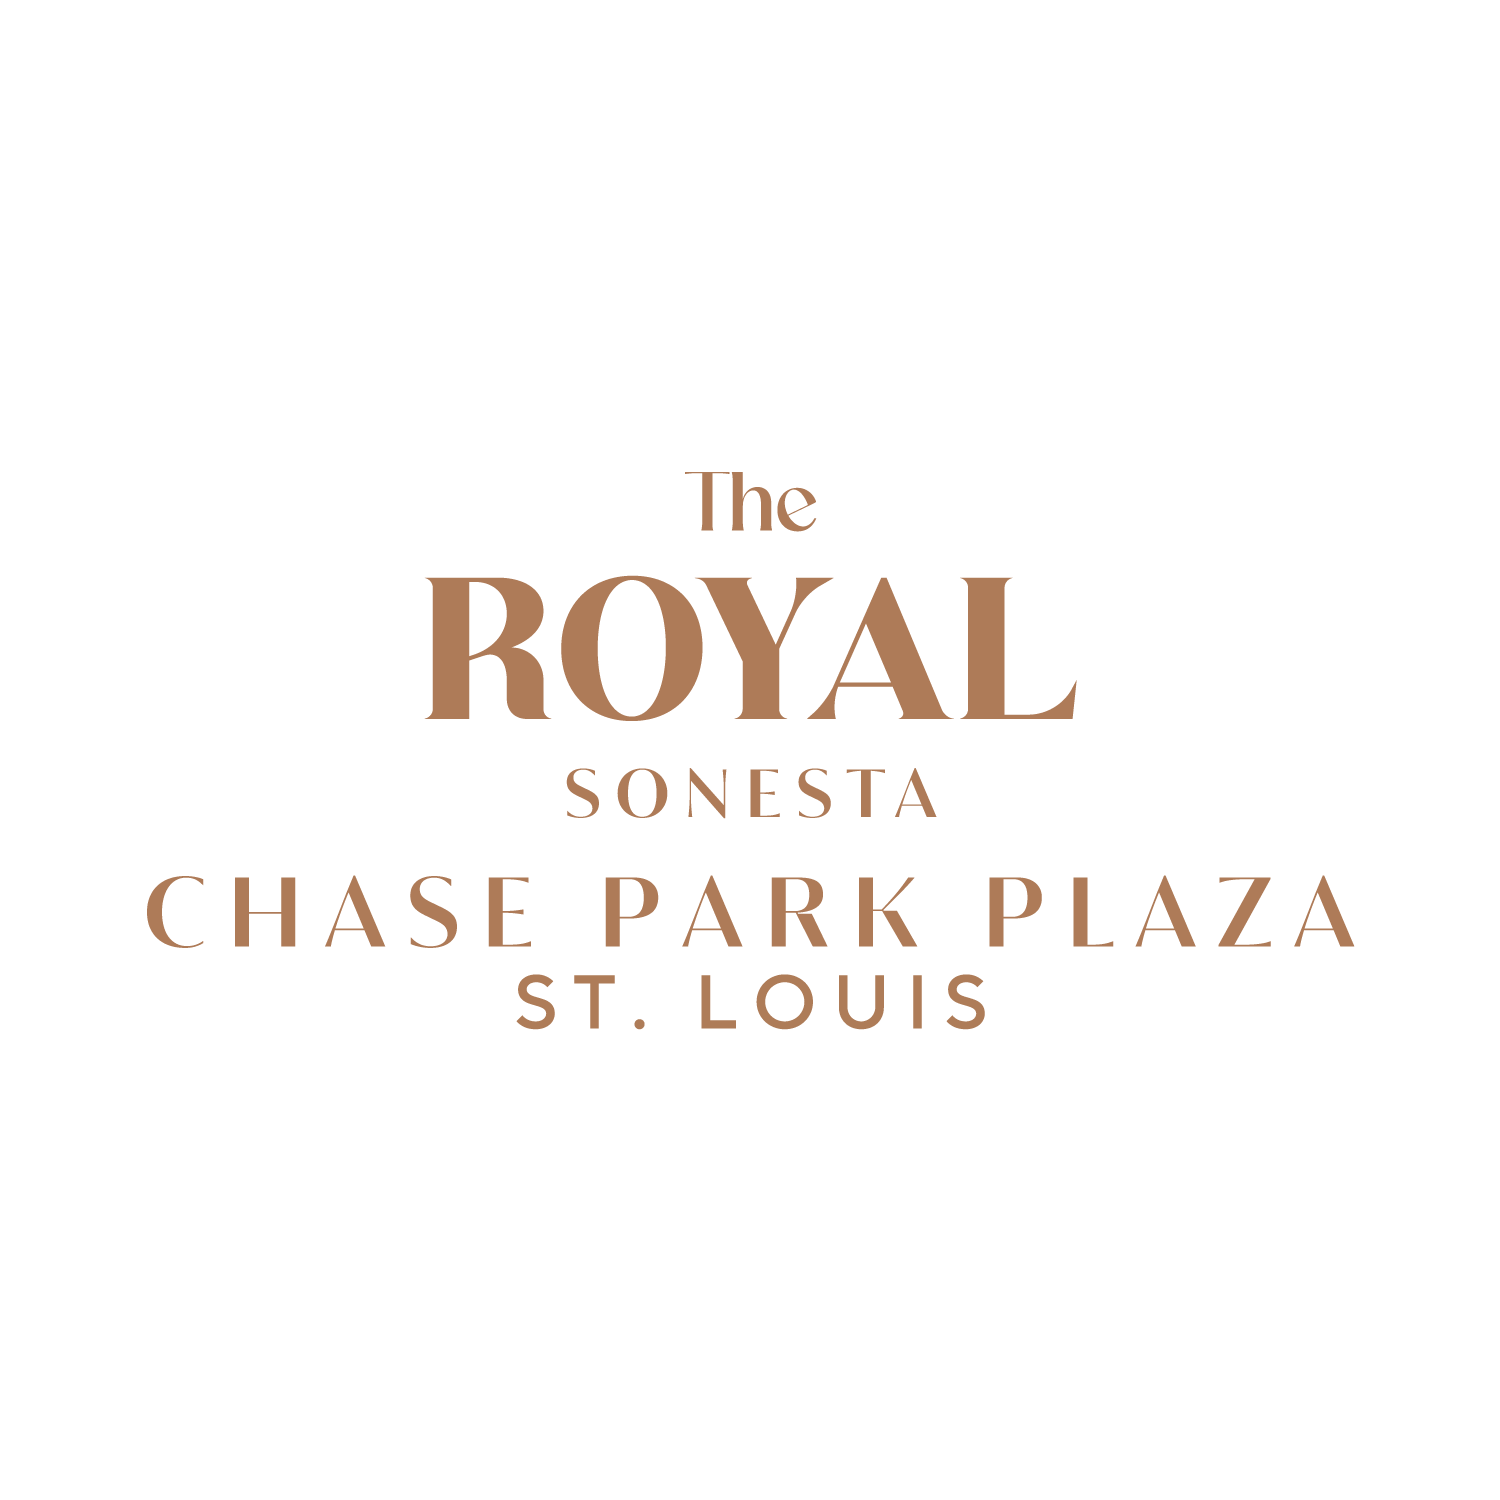 The Royal Sonesta Chase Park Plaza St. Louis